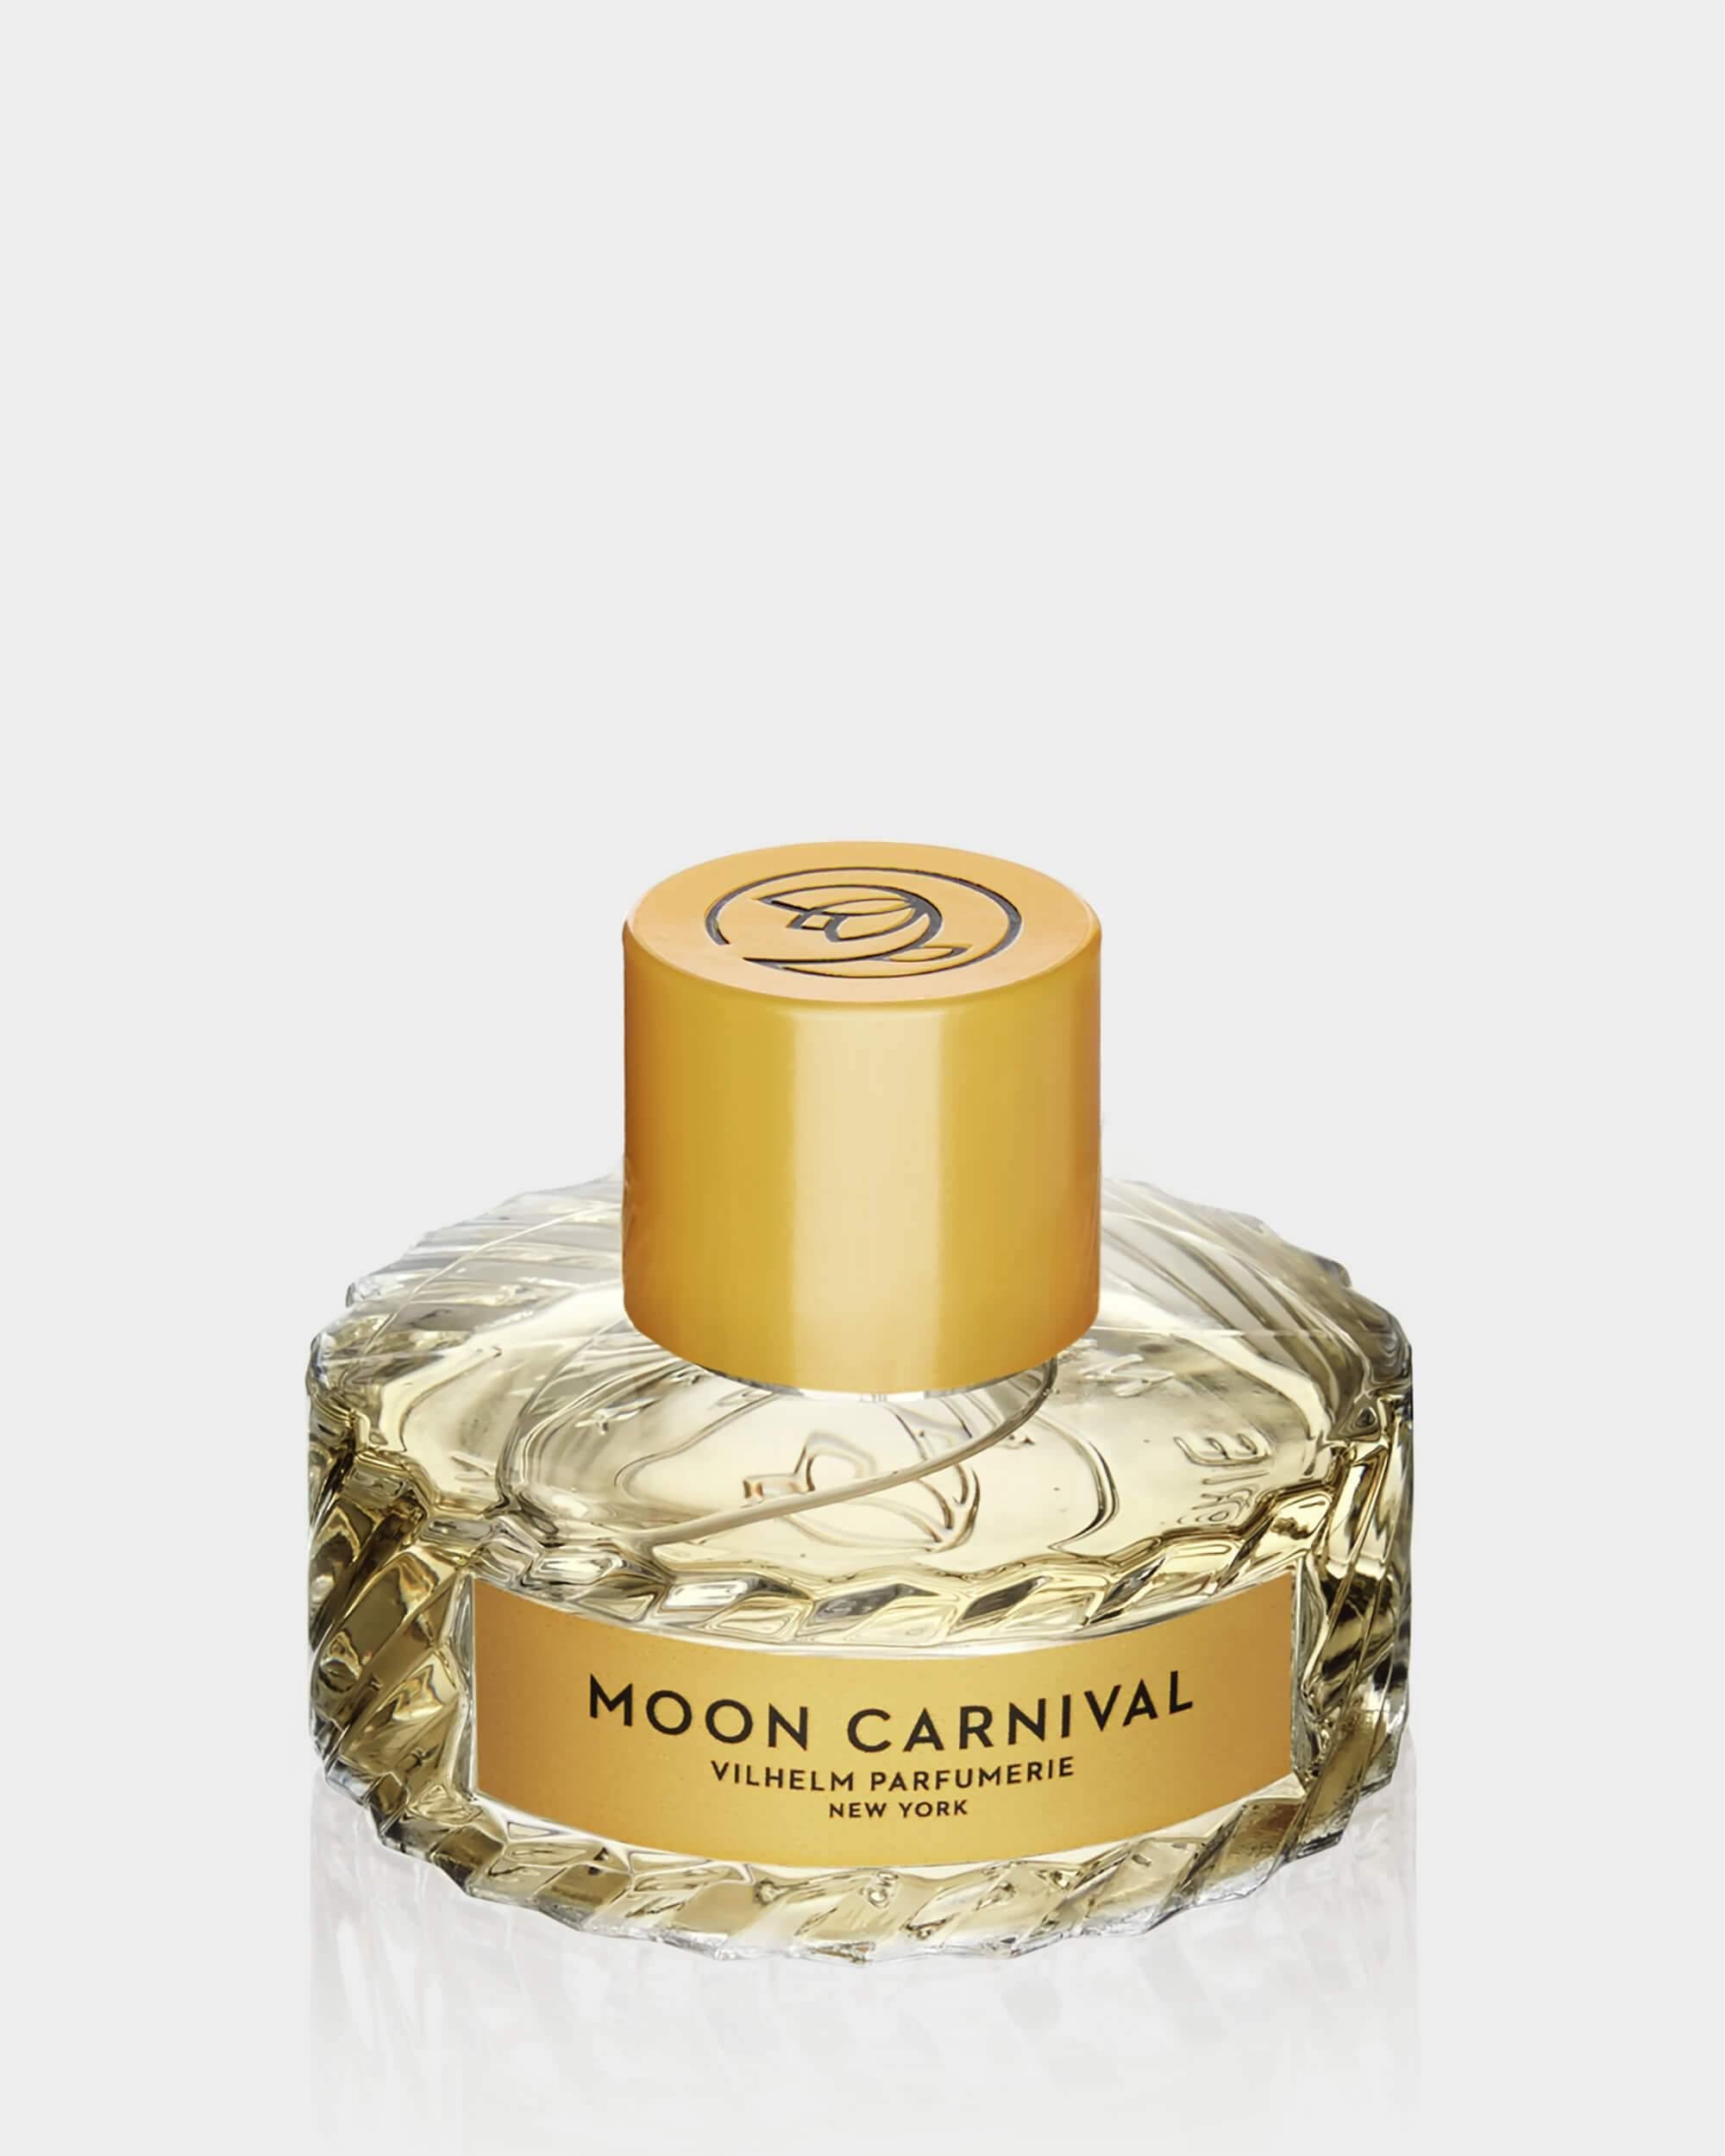 MOON CARNIVAL - Vilhelm Parfumerie